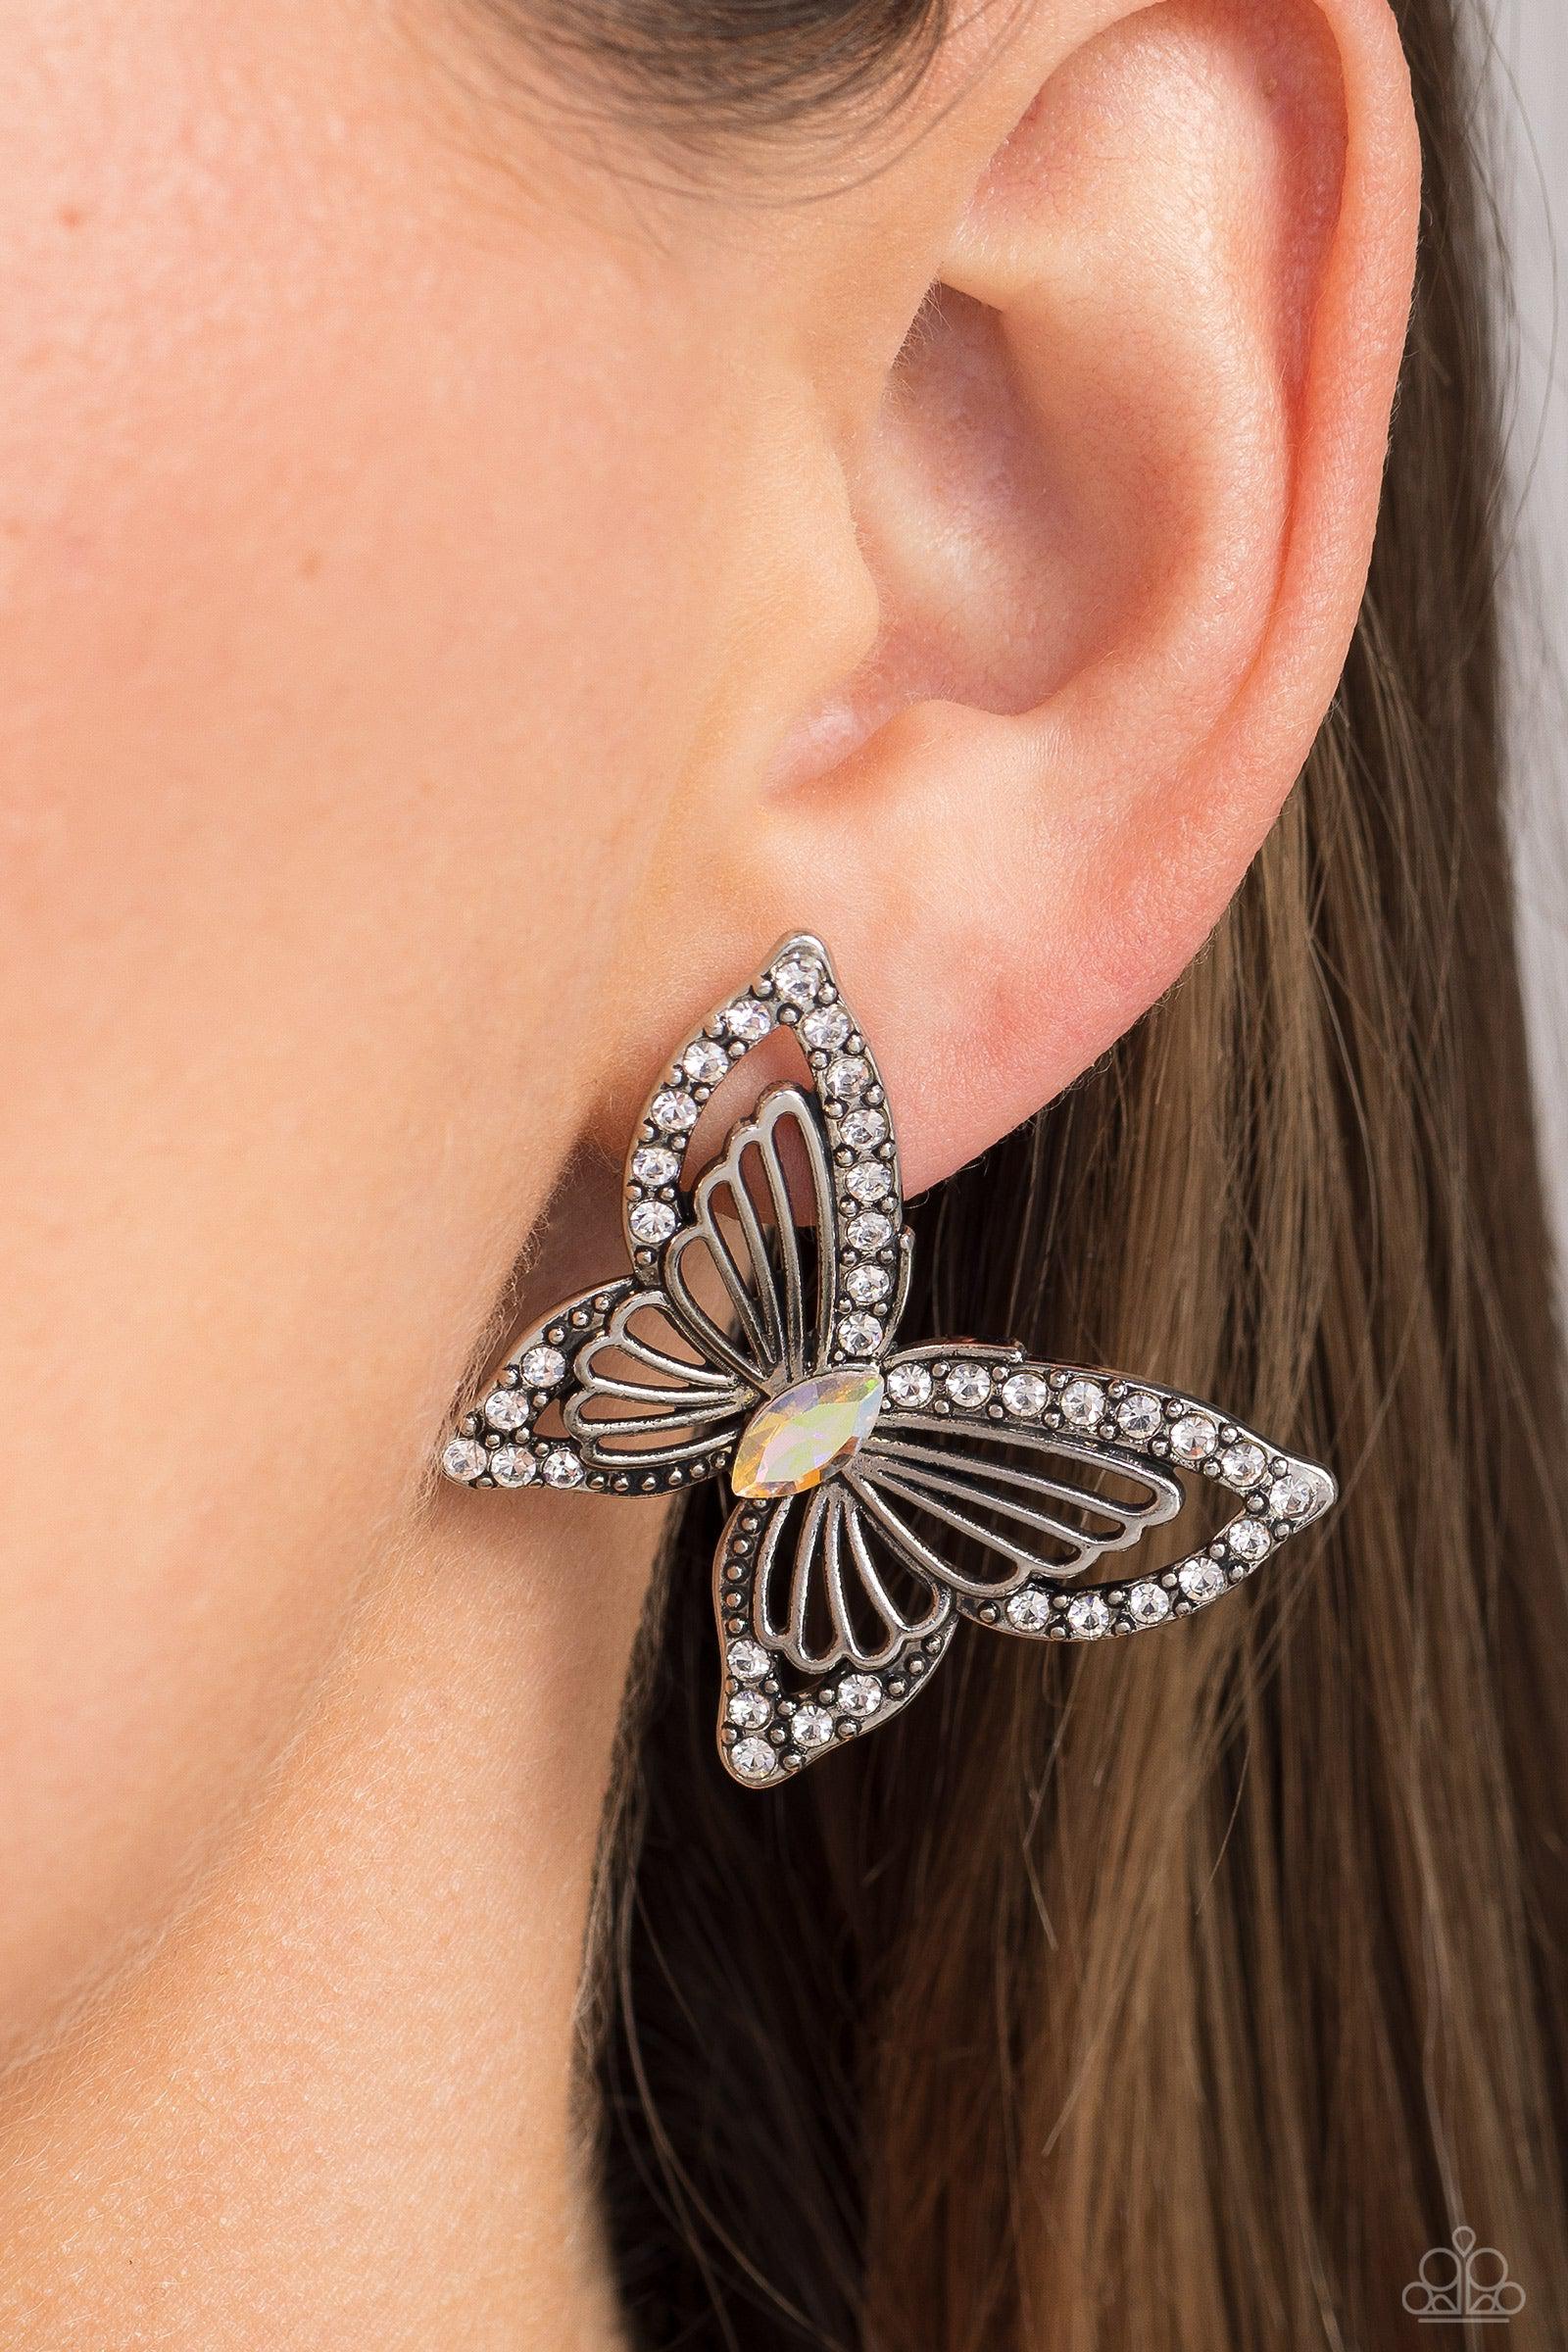 Wispy Wings Multi & White Gem Butterfly Earrings - Paparazzi Accessories- lightbox - CarasShop.com - $5 Jewelry by Cara Jewels